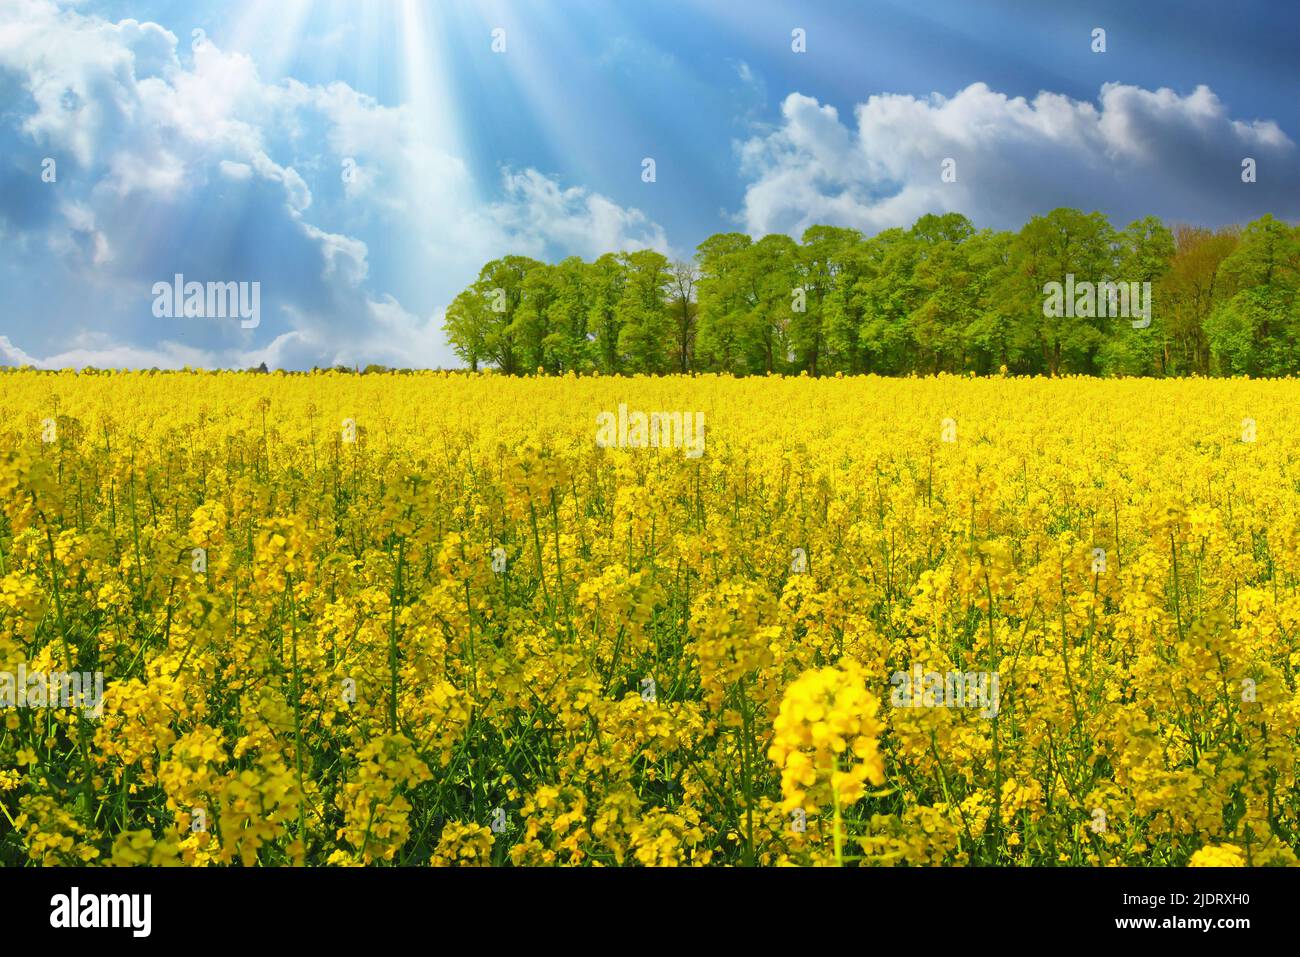 Beautiful rural idyllic dutch farm landscape, vibrant yellow rapeseed flower field, green forest, bright springtime sun rays - Netherlands Stock Photo